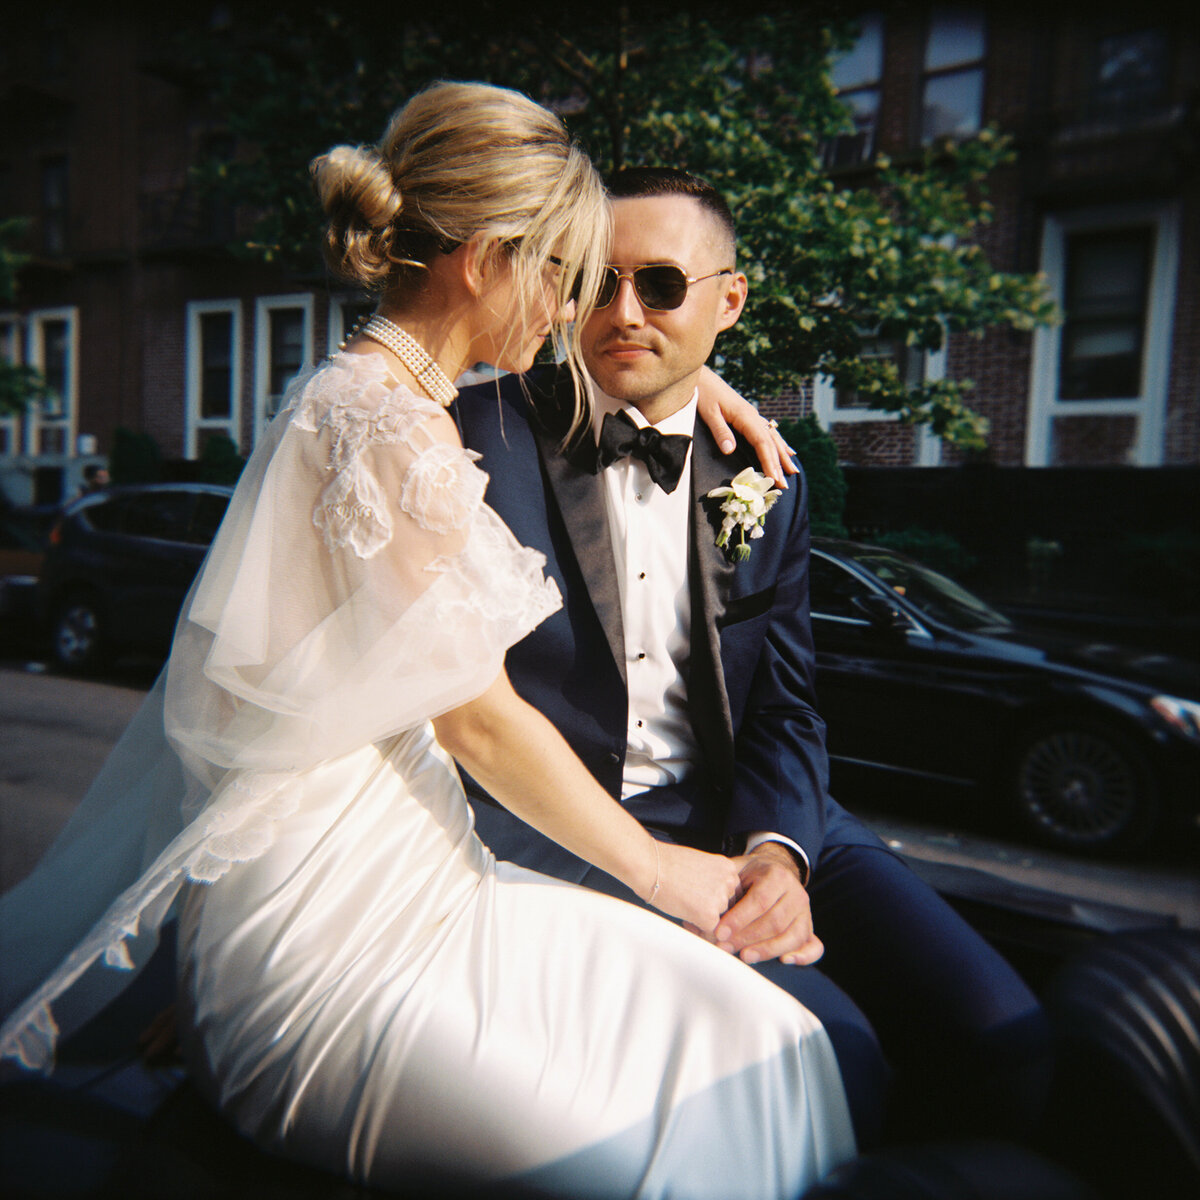 timeless-class-car-wedding-couple-photo-fun-candid-moment-sarah-brehant-events